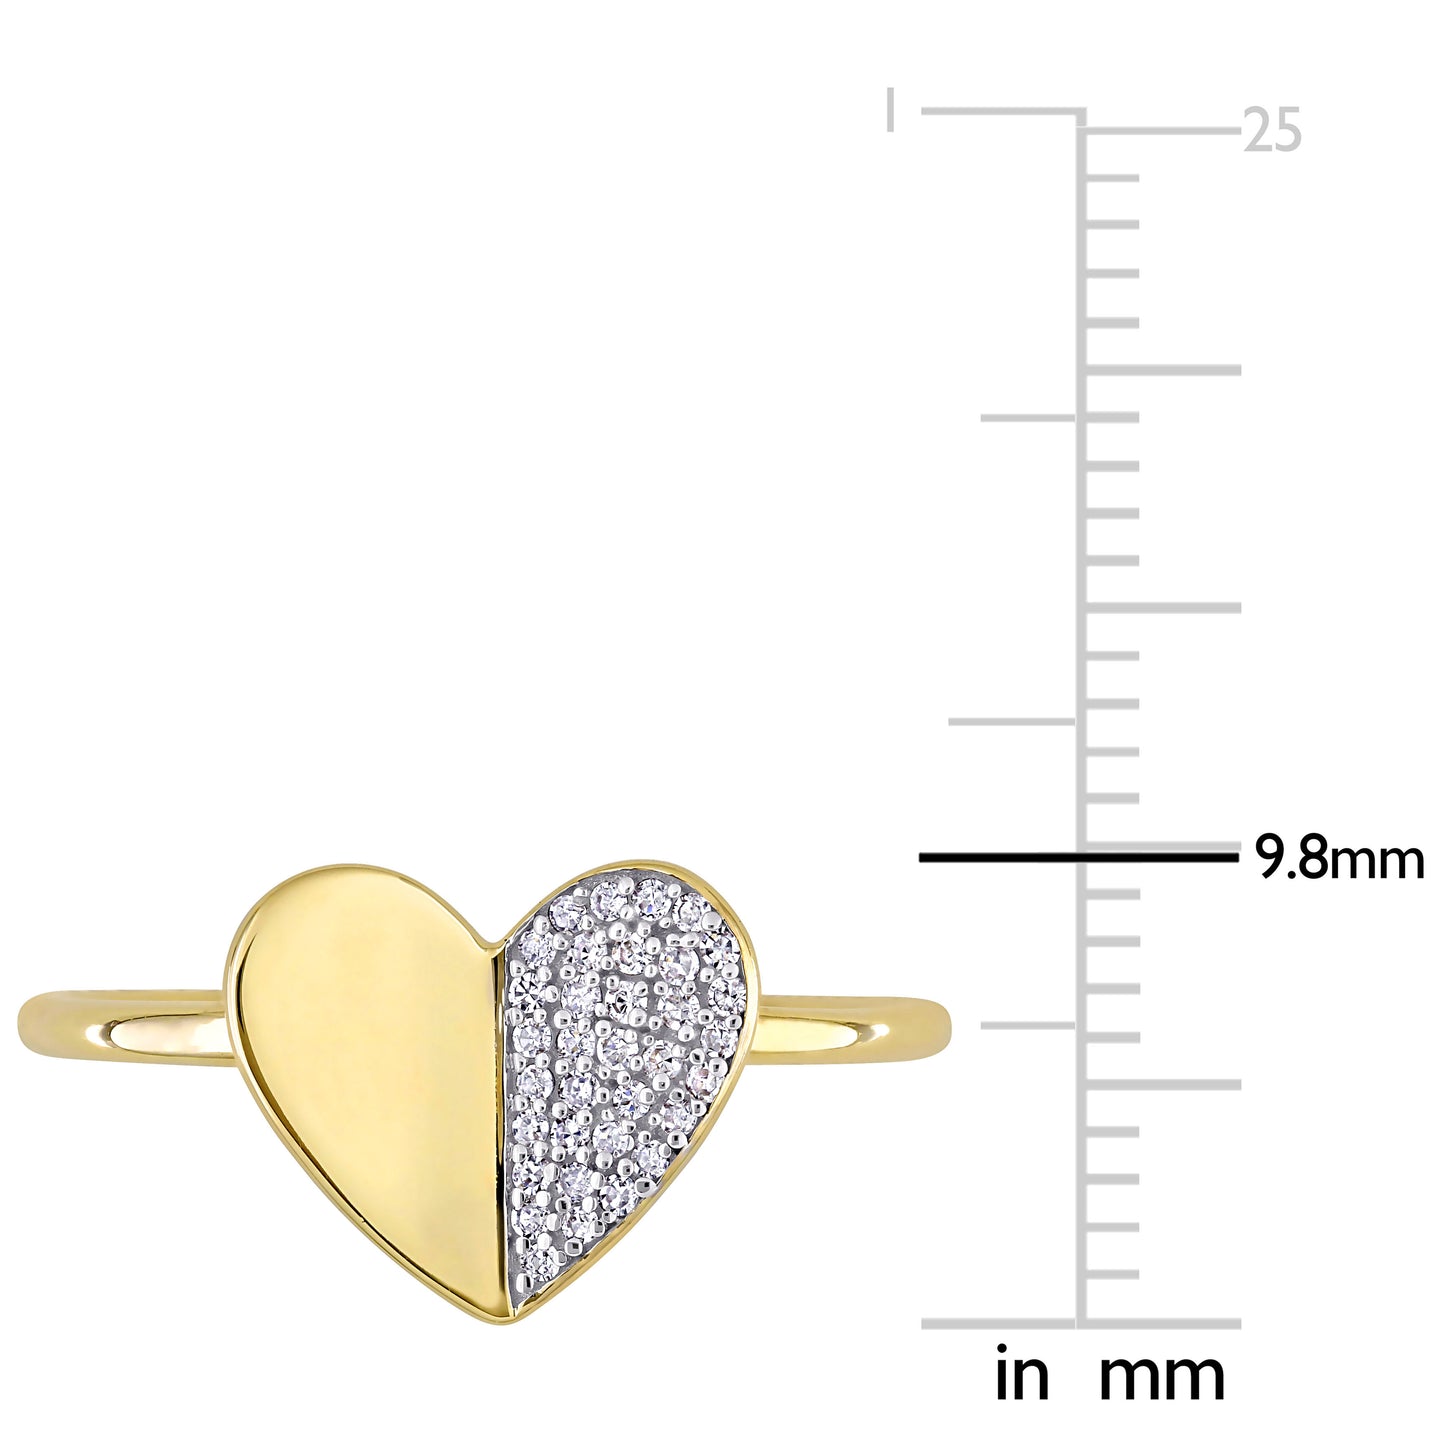 Mixed Media Heart Diamond Ring in 10k Yellow Gold